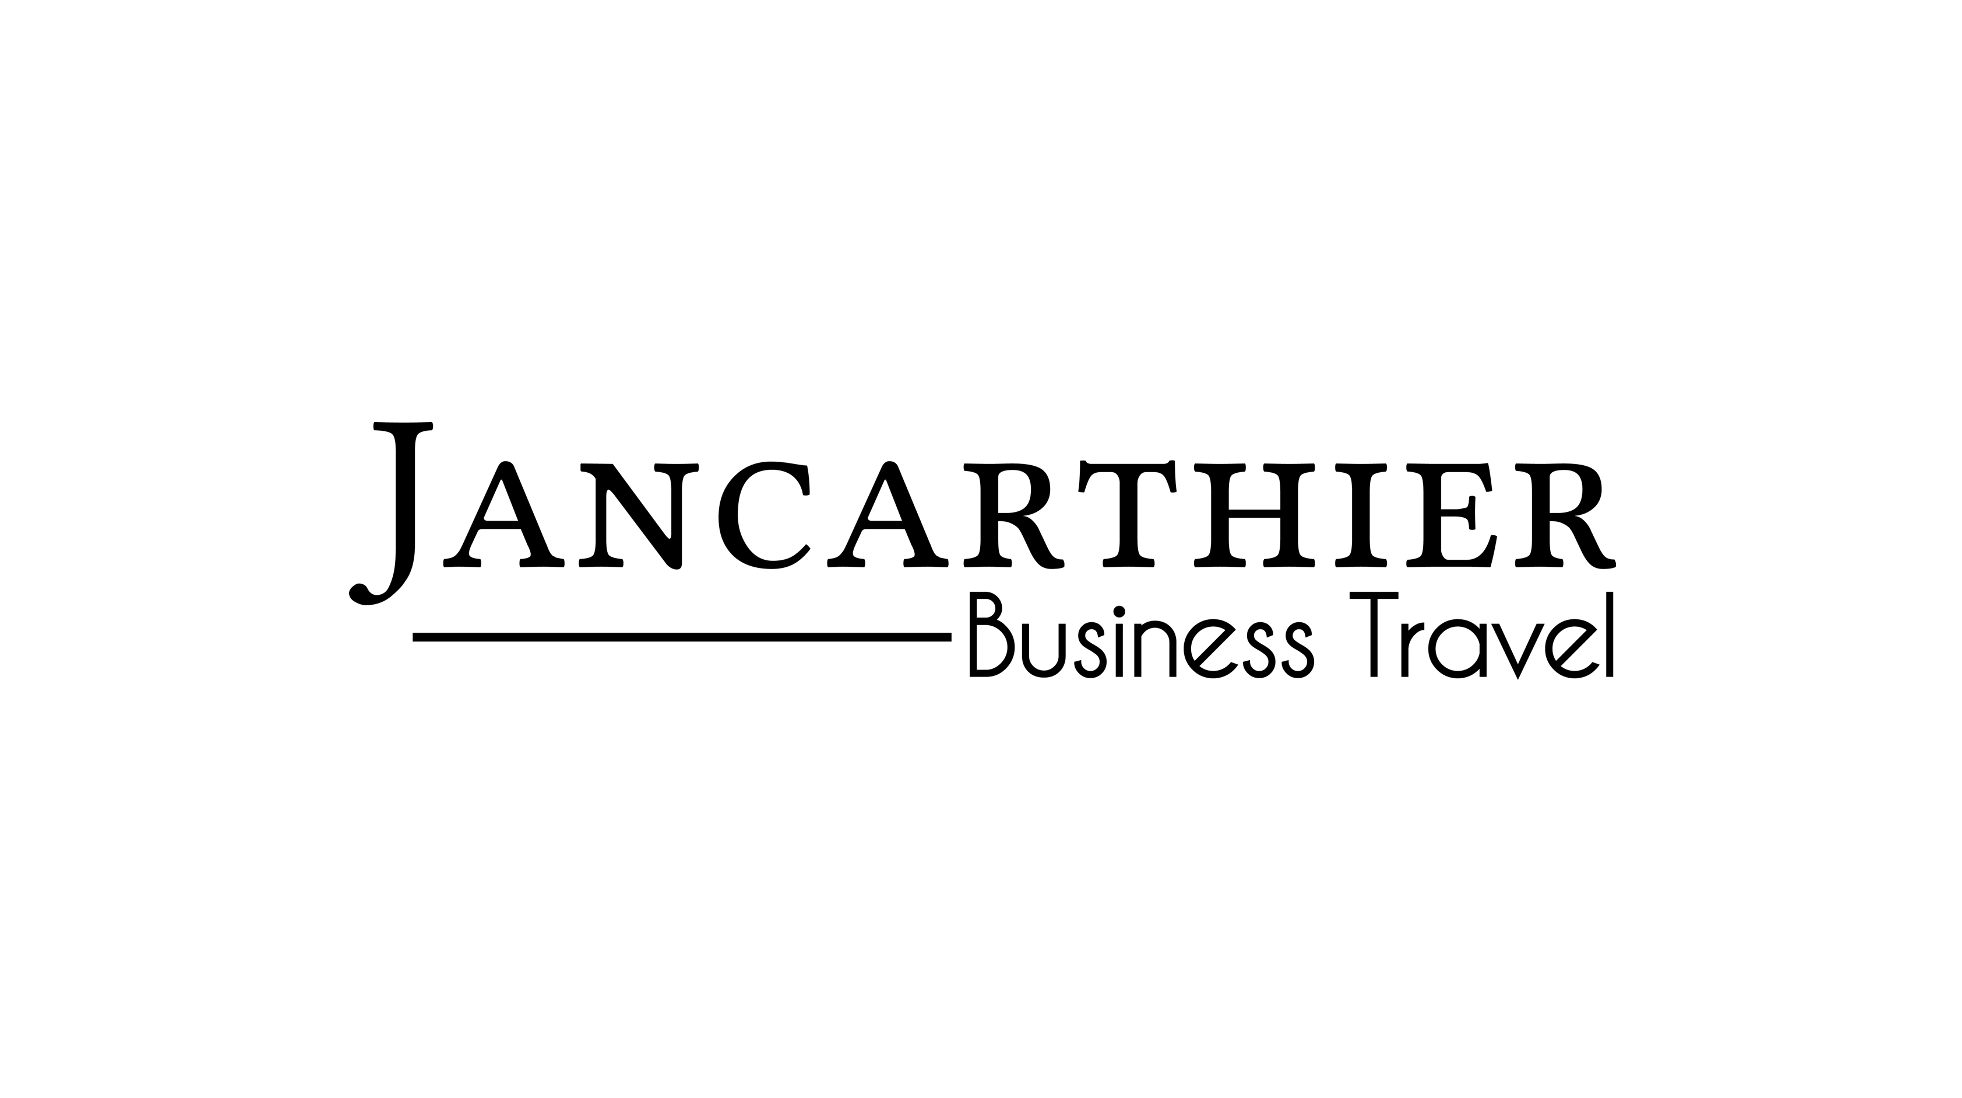 Jancarthier Business Travel